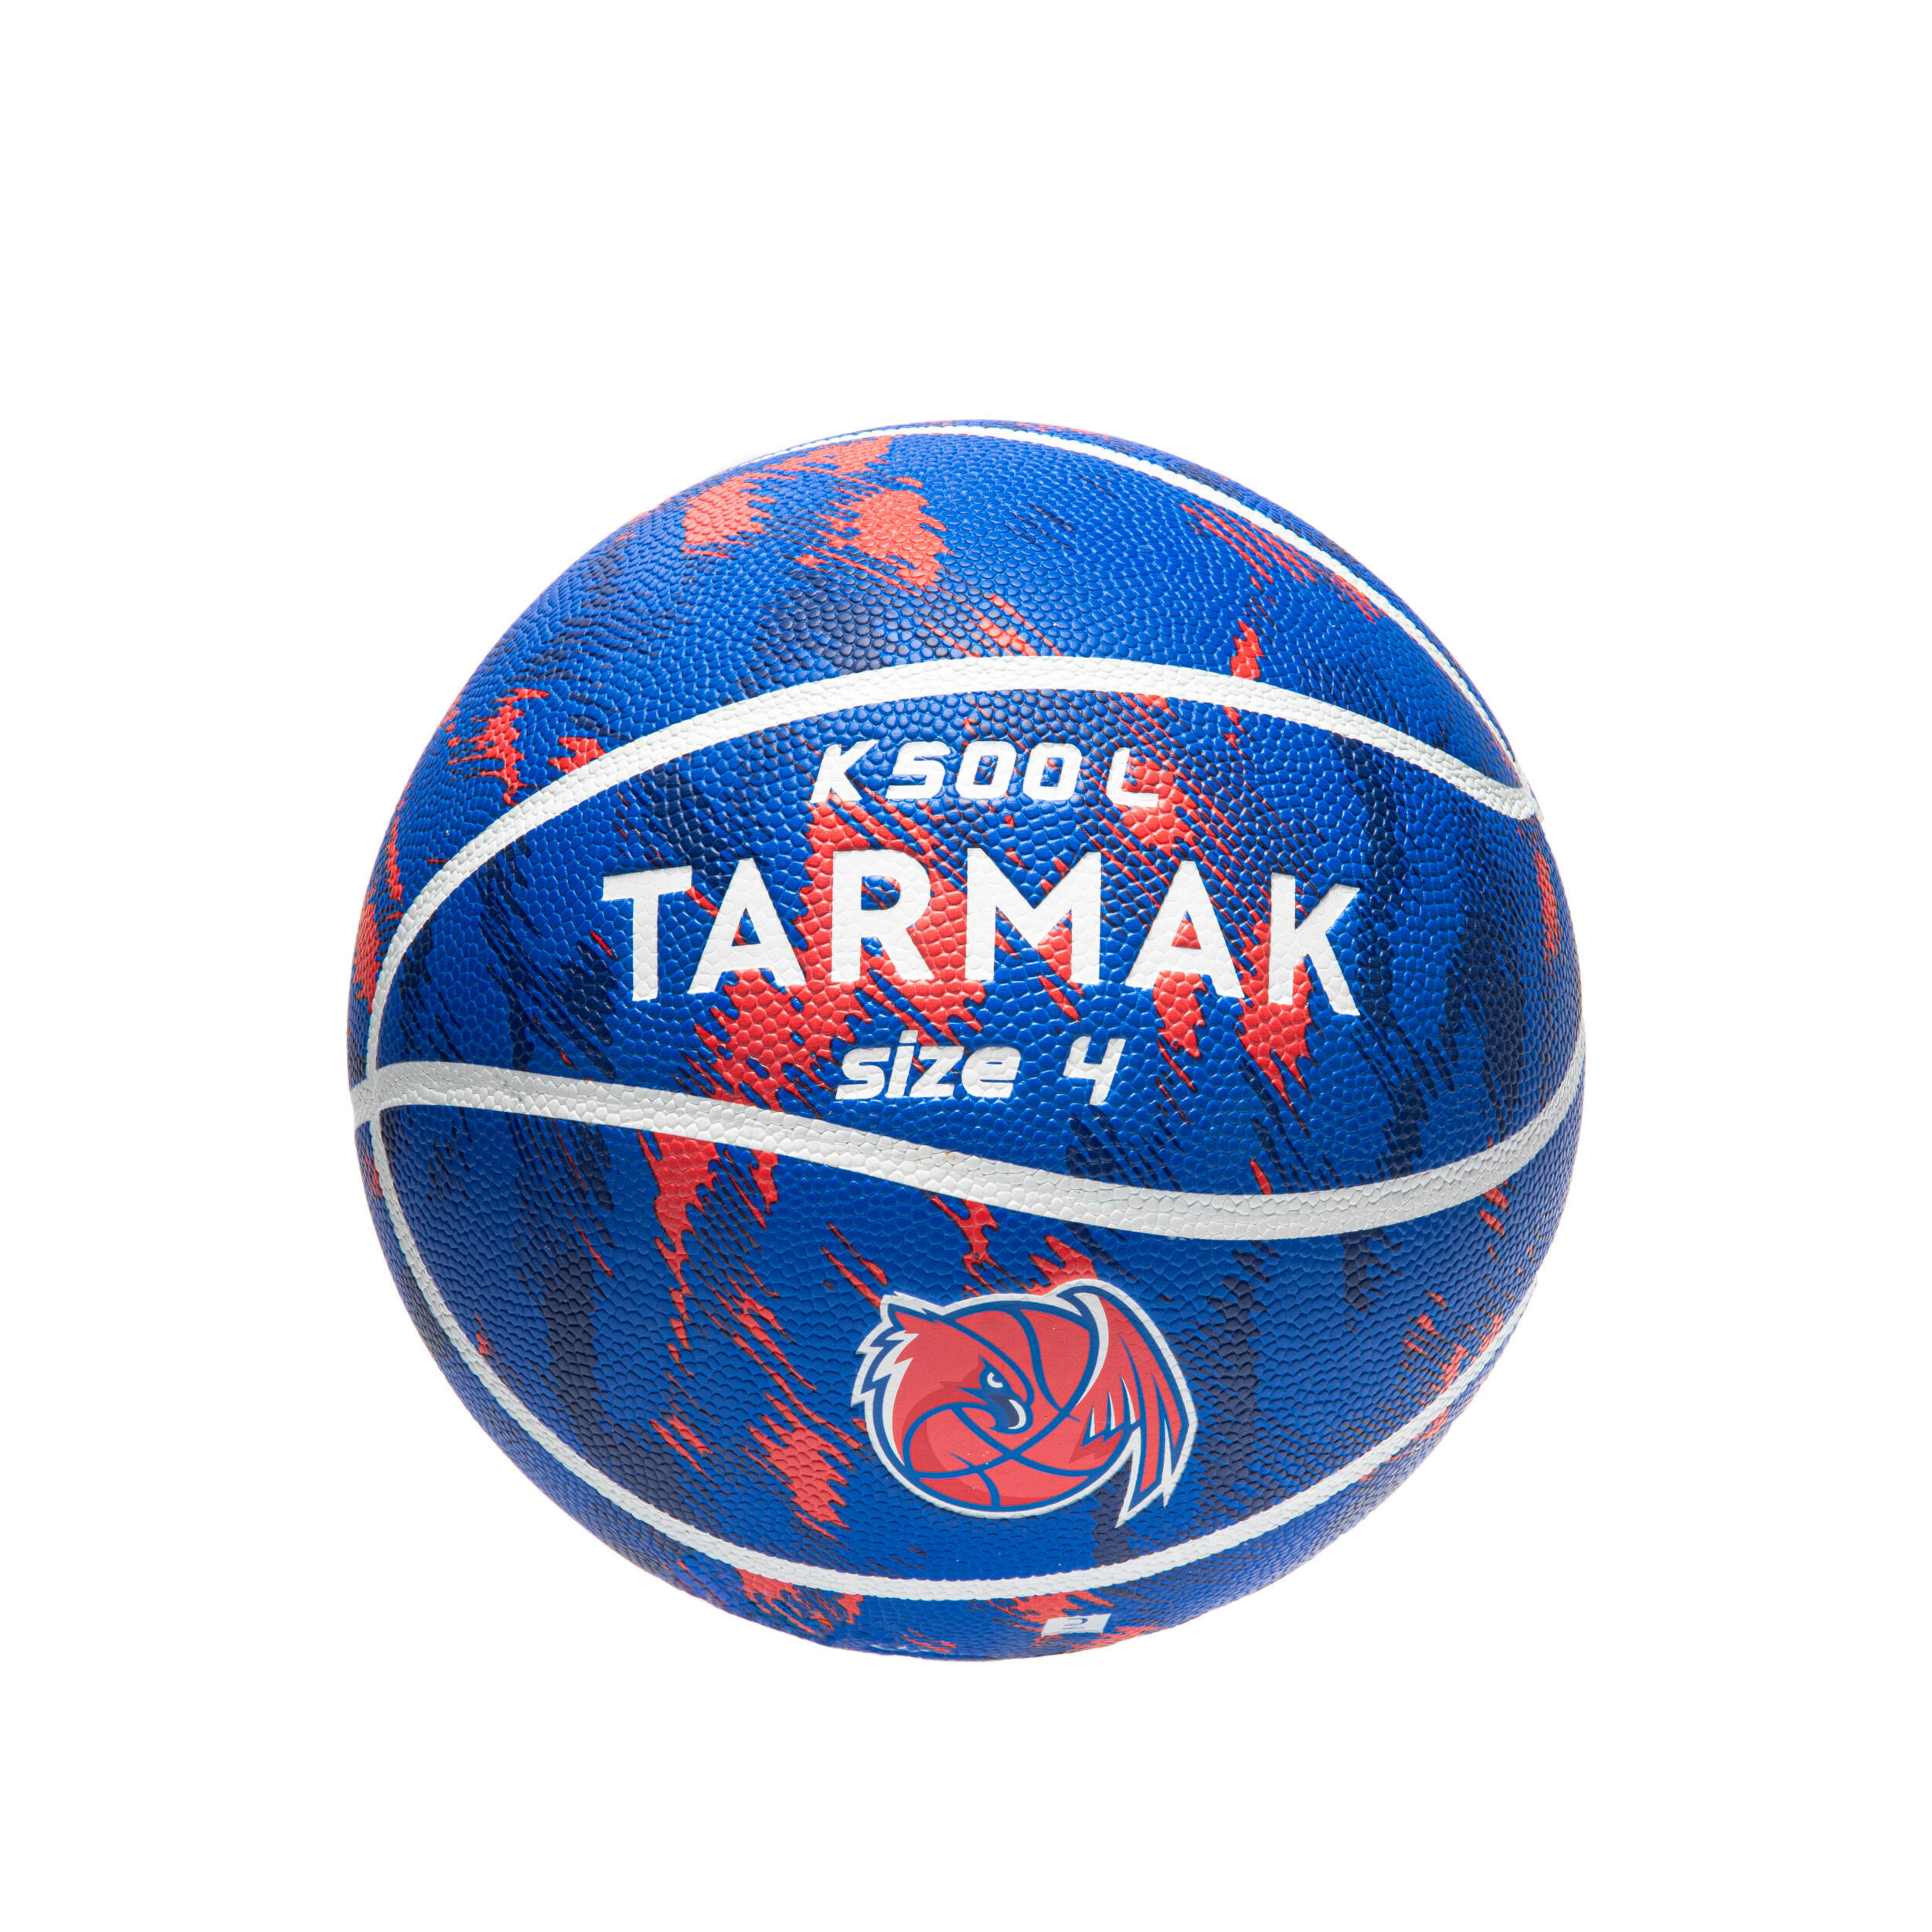 TARMAK Kids' Size 4 Basketball K500 - Blue/Orange